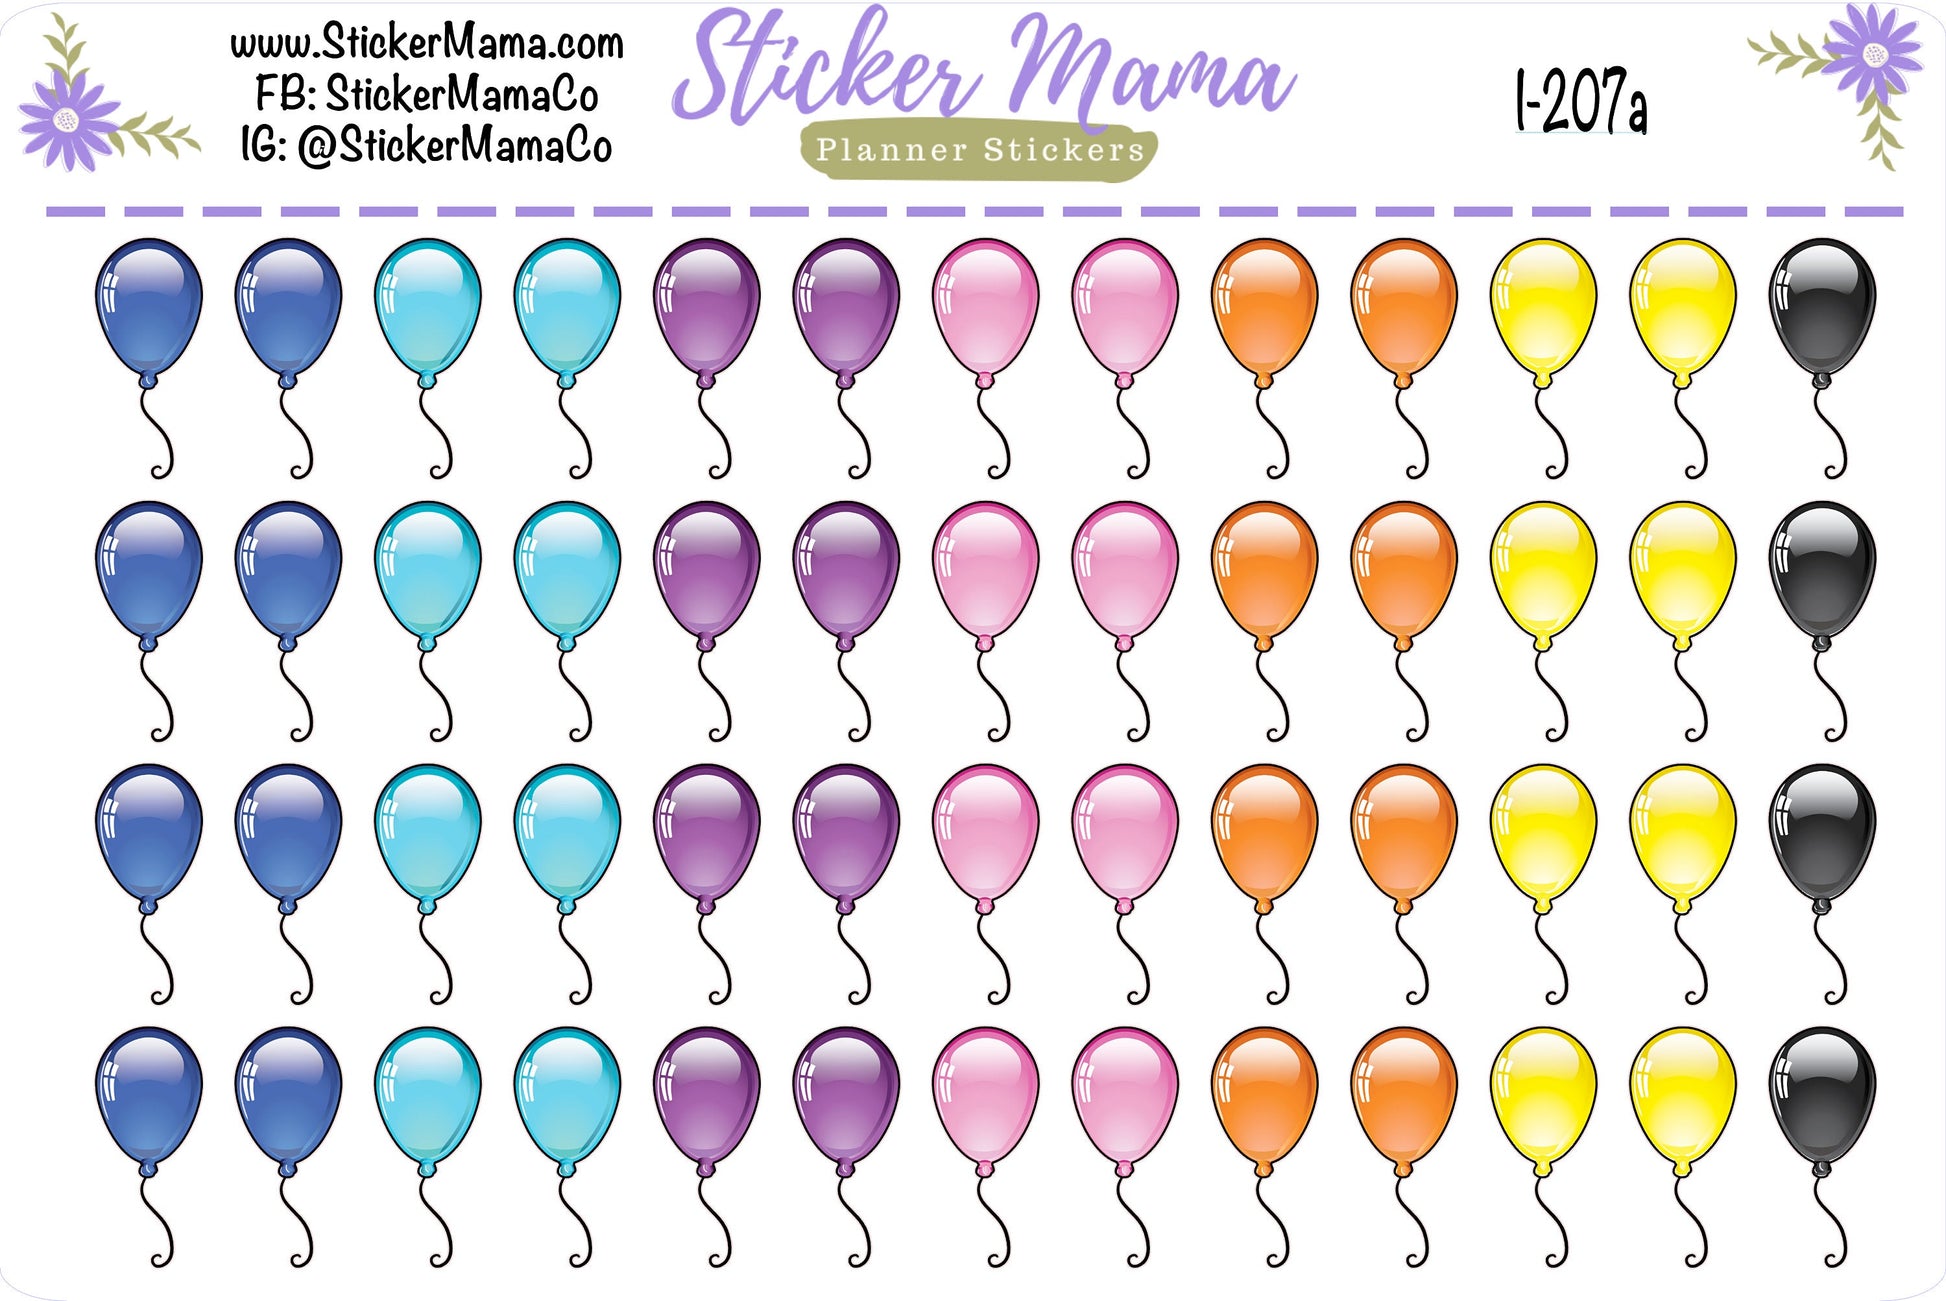 BALLOON PLANNER Stickers I-207, Balloon Stickers